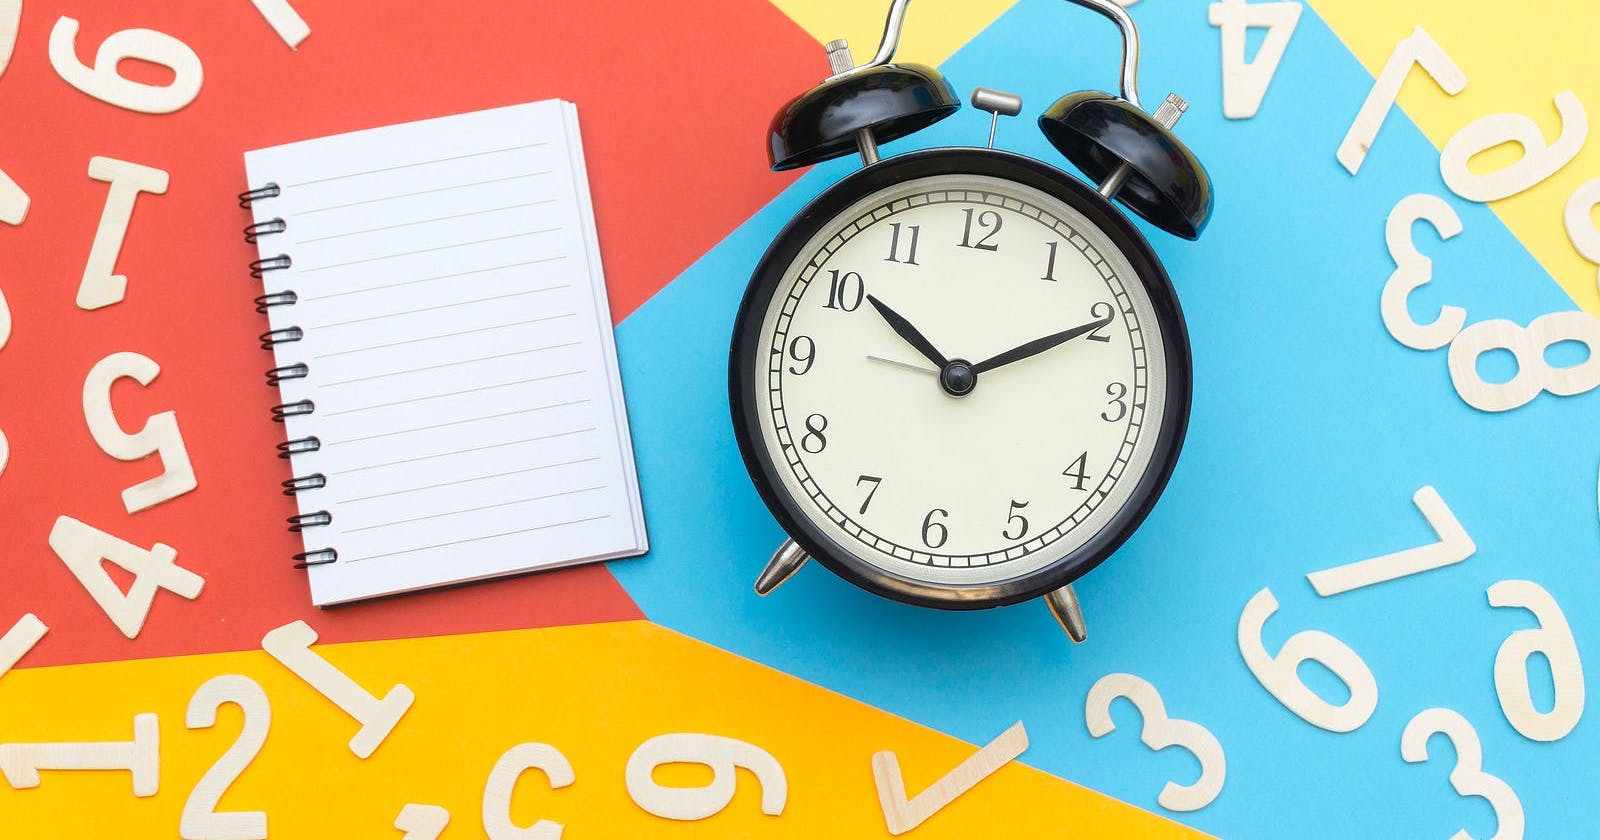 6 Ways to Waste Time Taking Notes